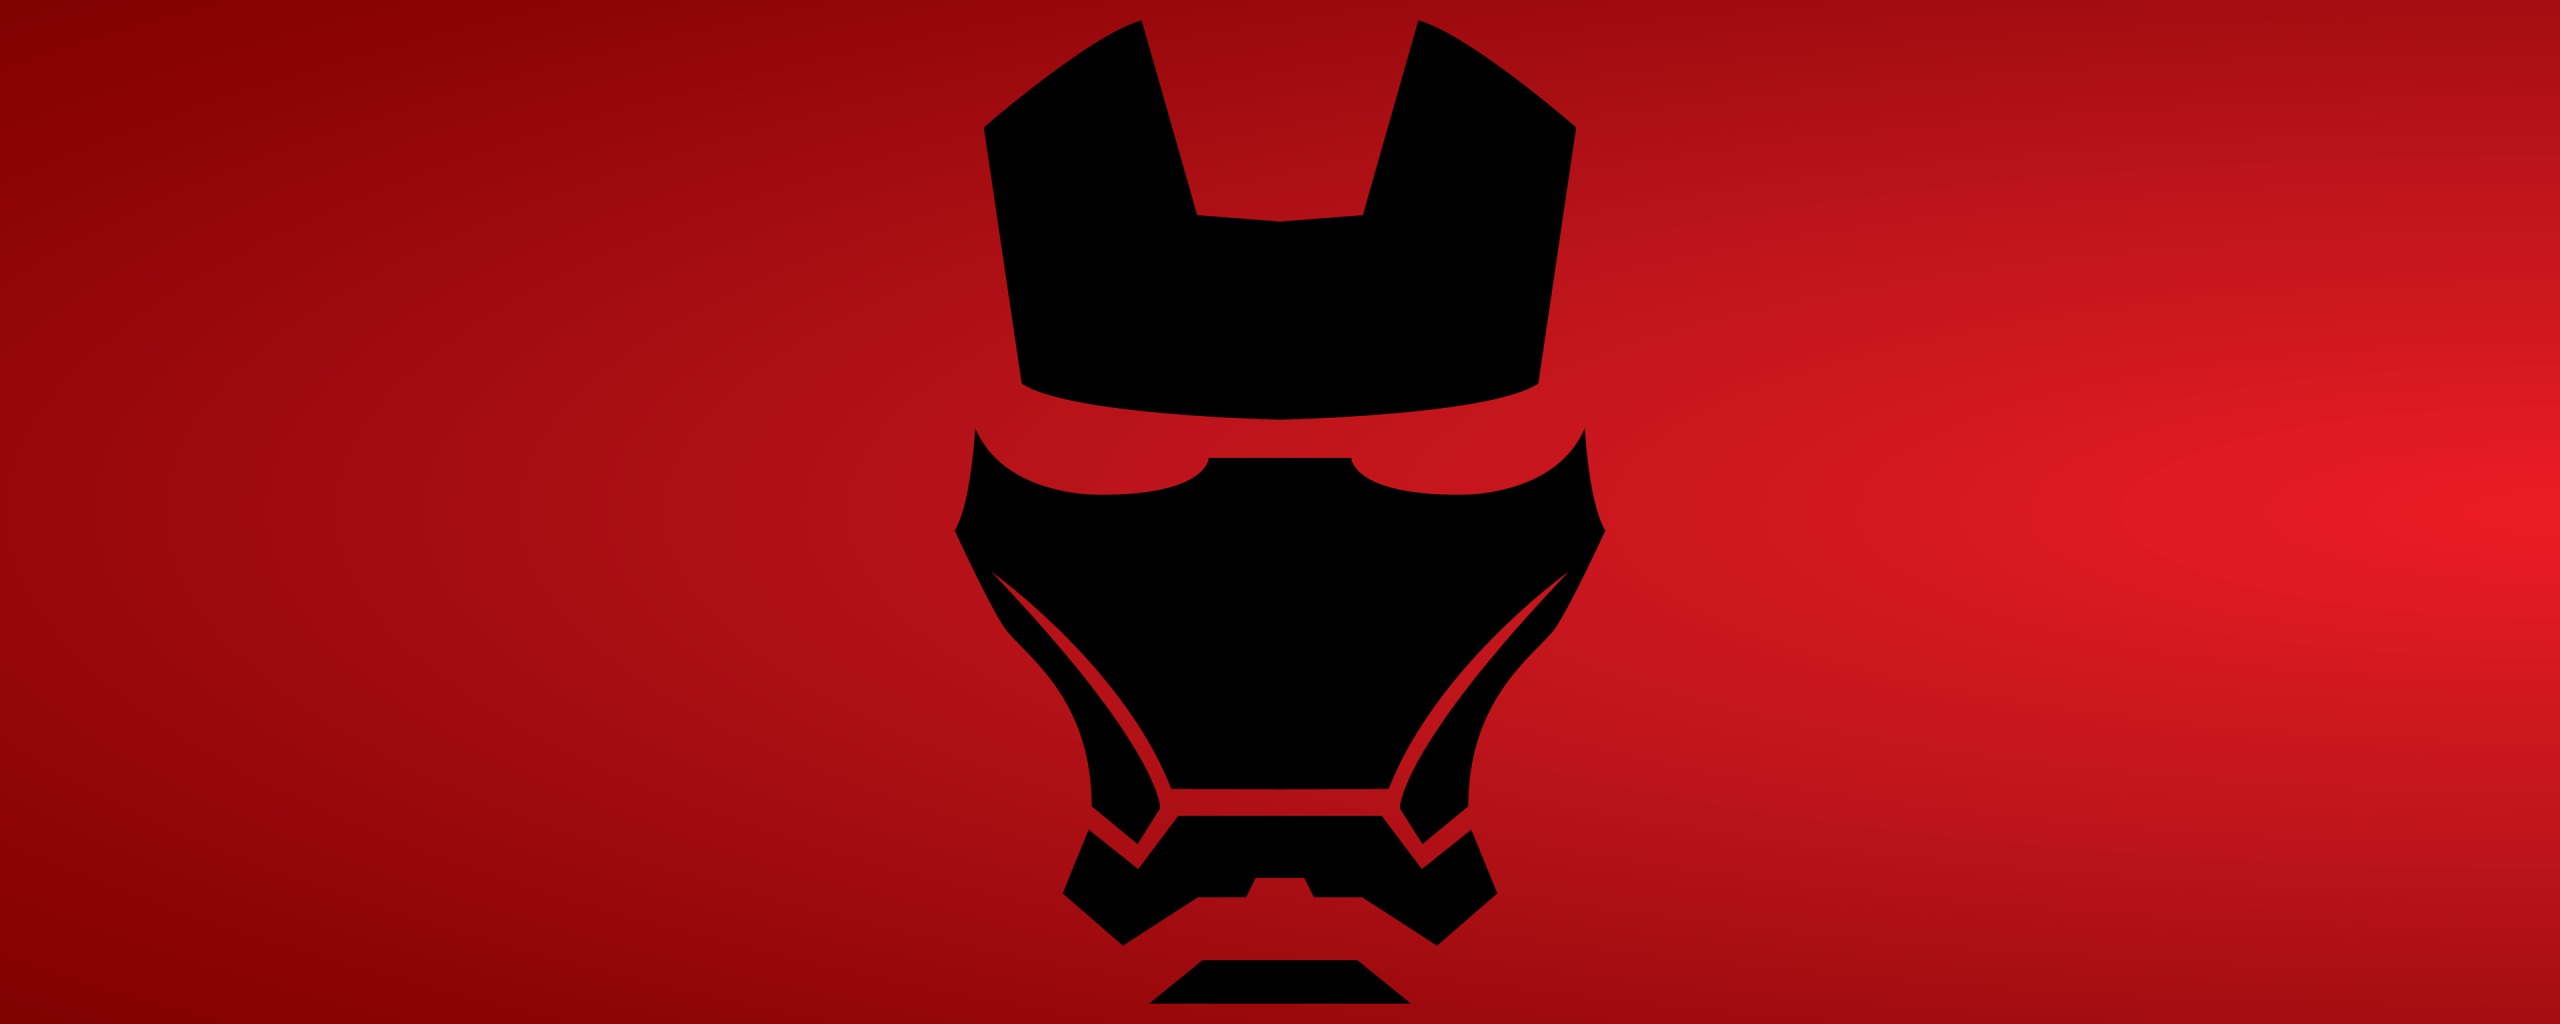 Iron Man Mask Minimalist 8k Wallpaper 4K